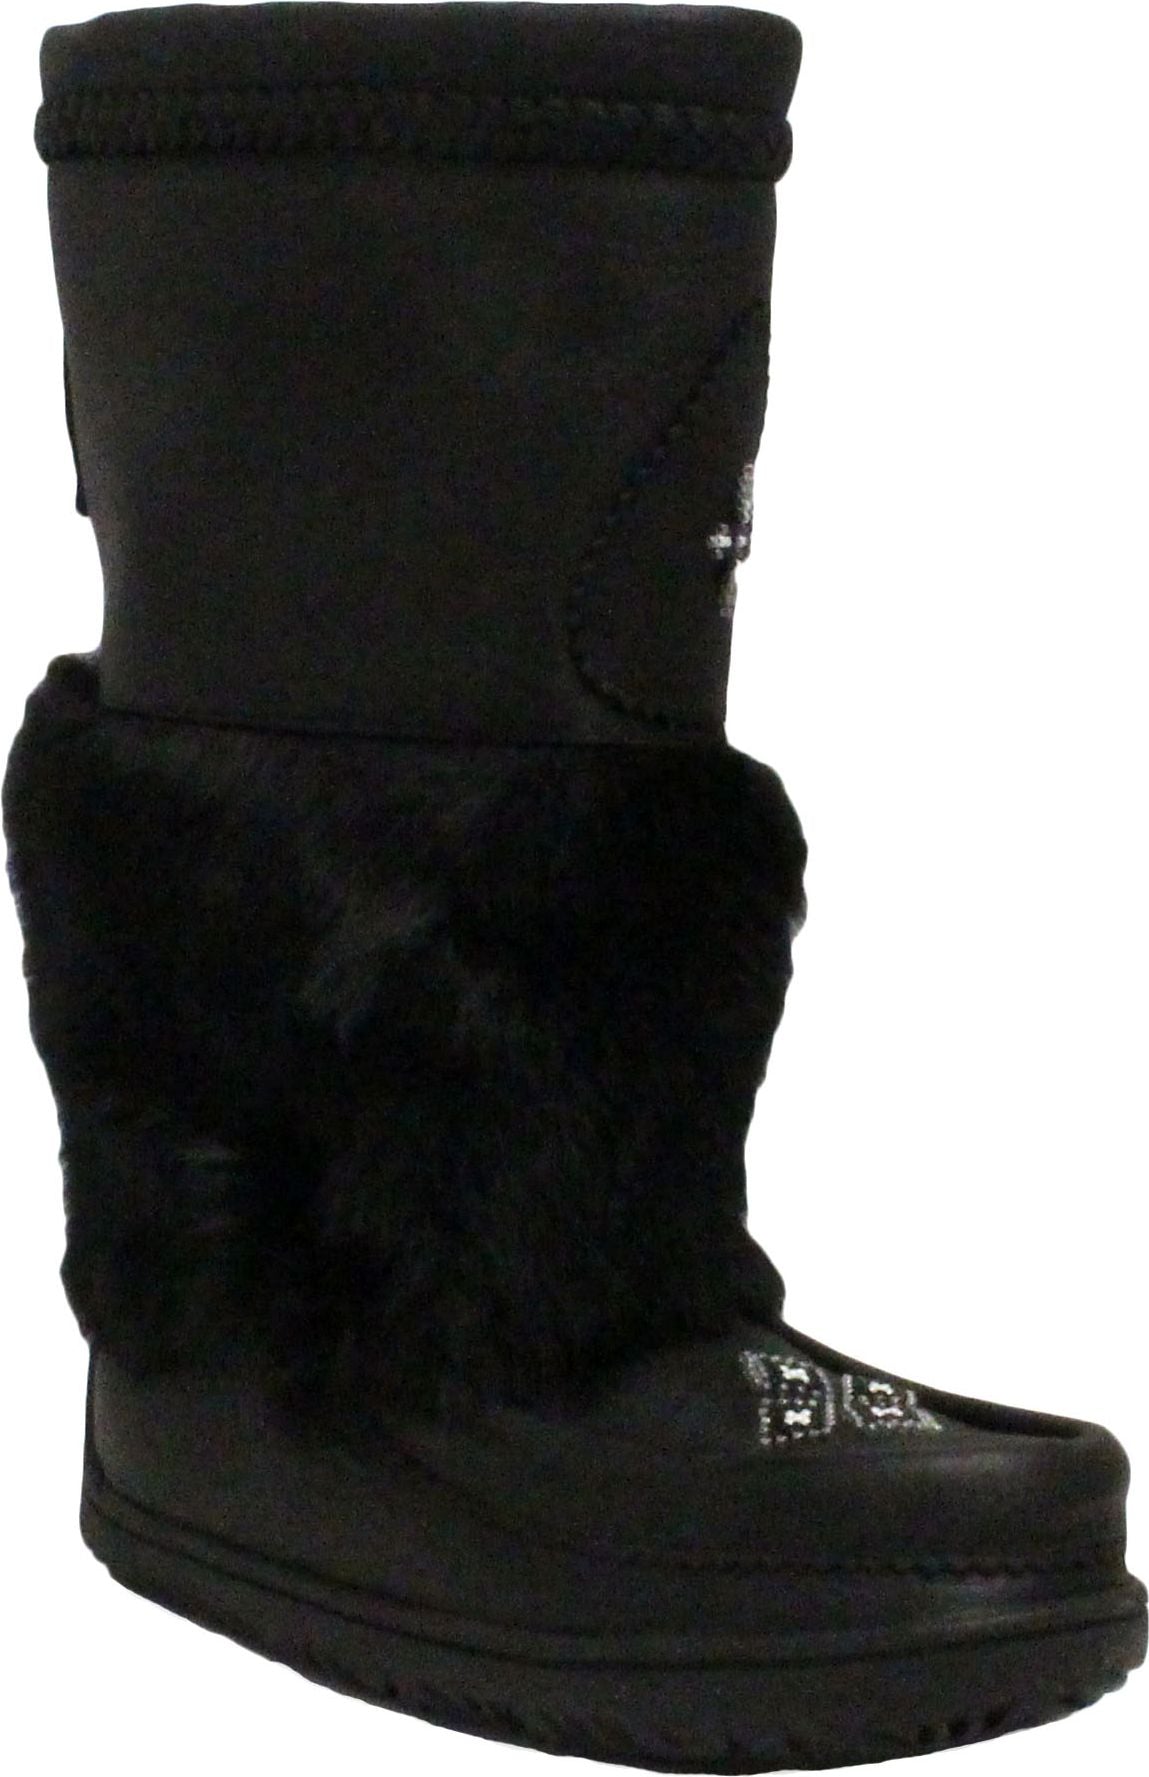 Urban Trail Boots Tall Waterproof Black Leather Mukluk